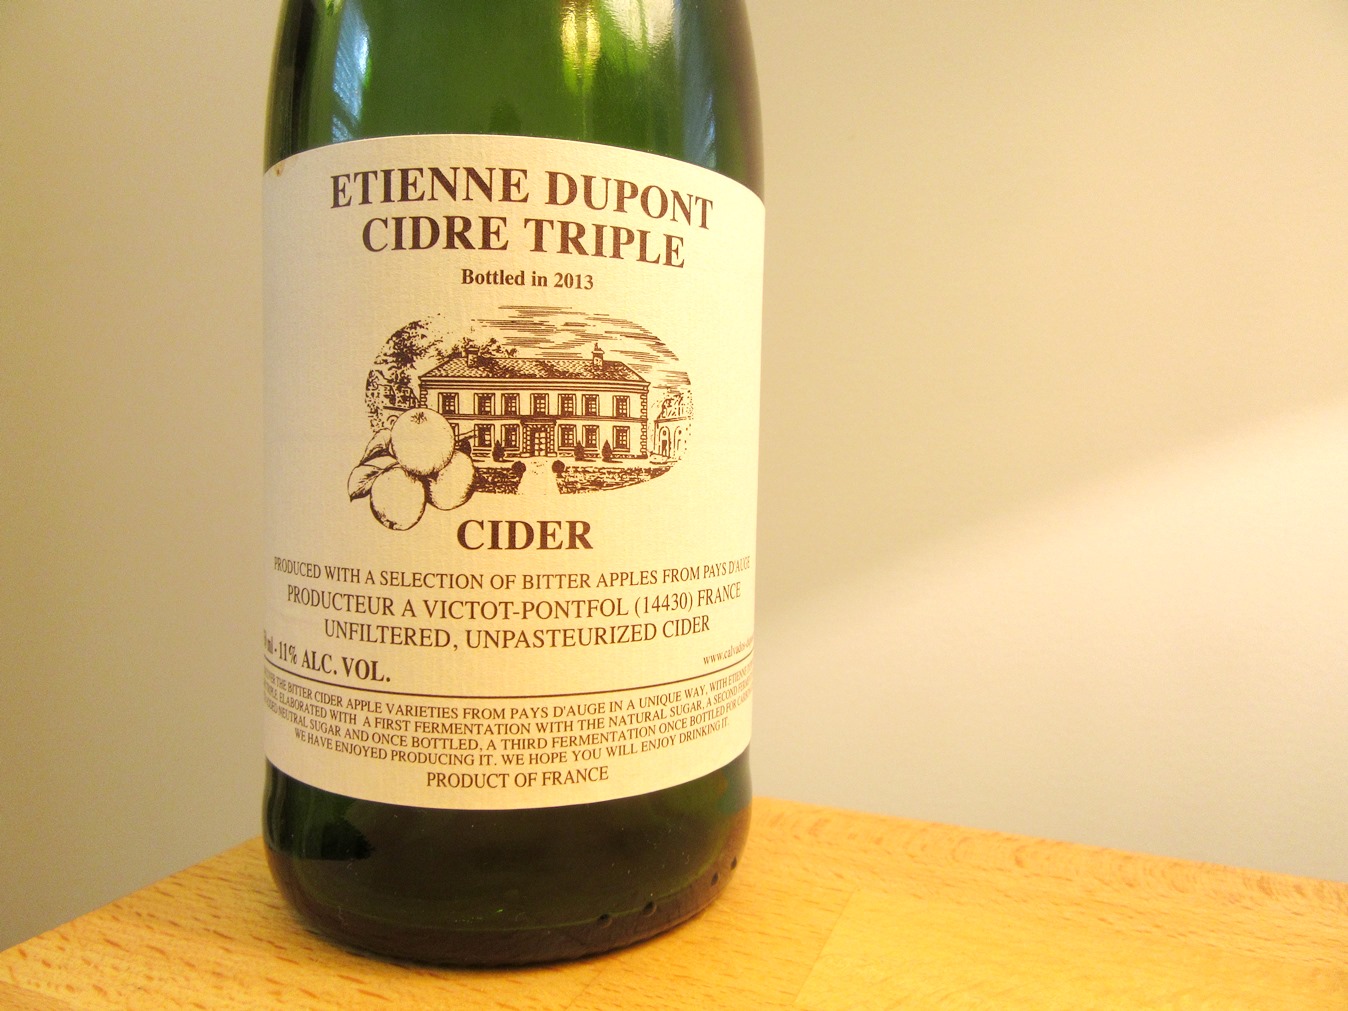 Photo Credit: Wine Casual, Etienne Dupont, Cidre Triple Cider 2013, Pays D’Auge, France